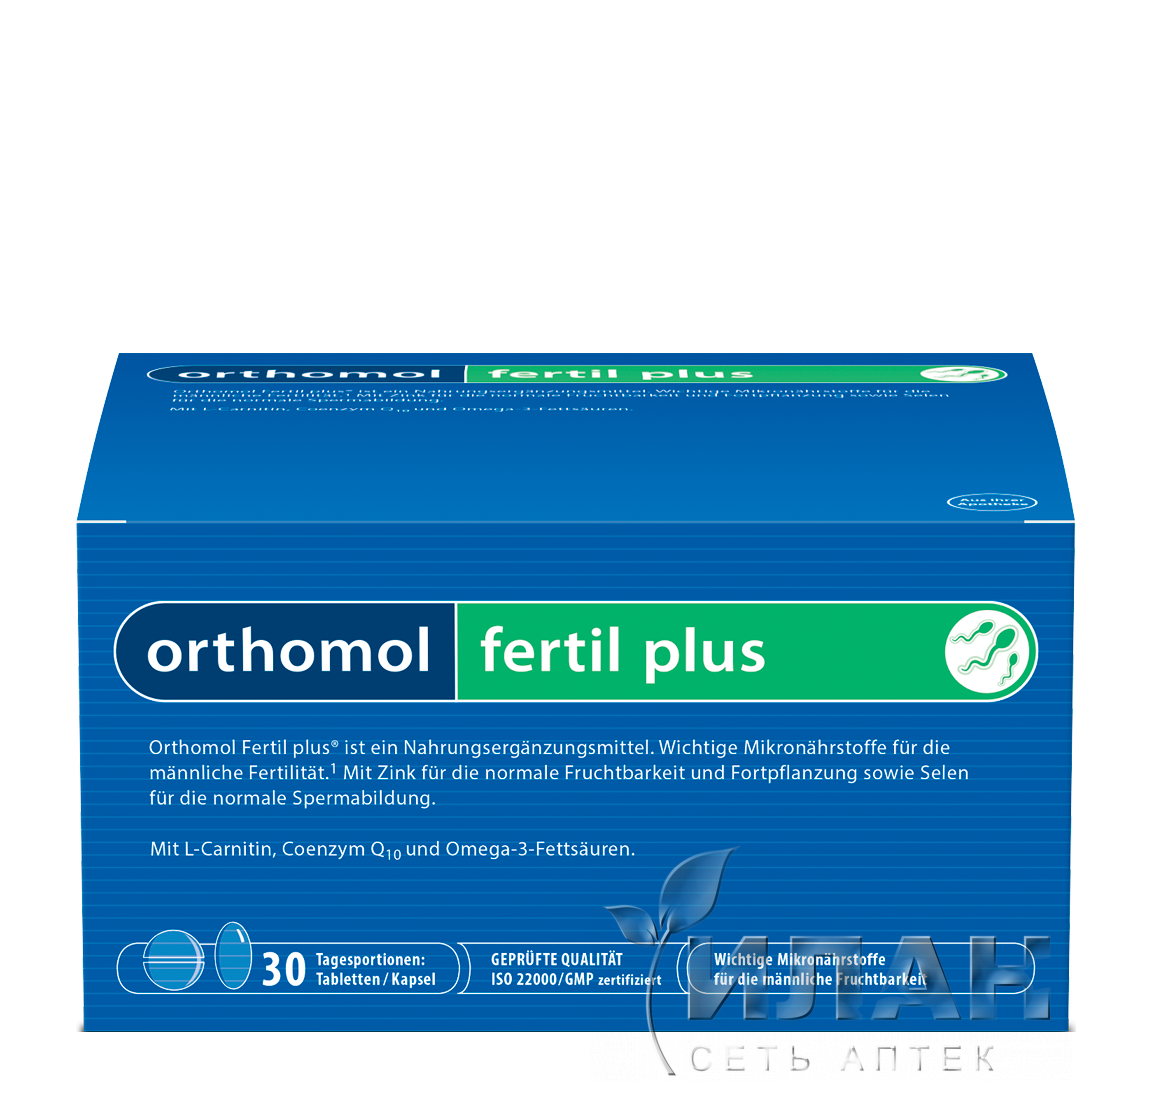 Ортомоль Фертиль плюс (Orthomol Fertil plus)